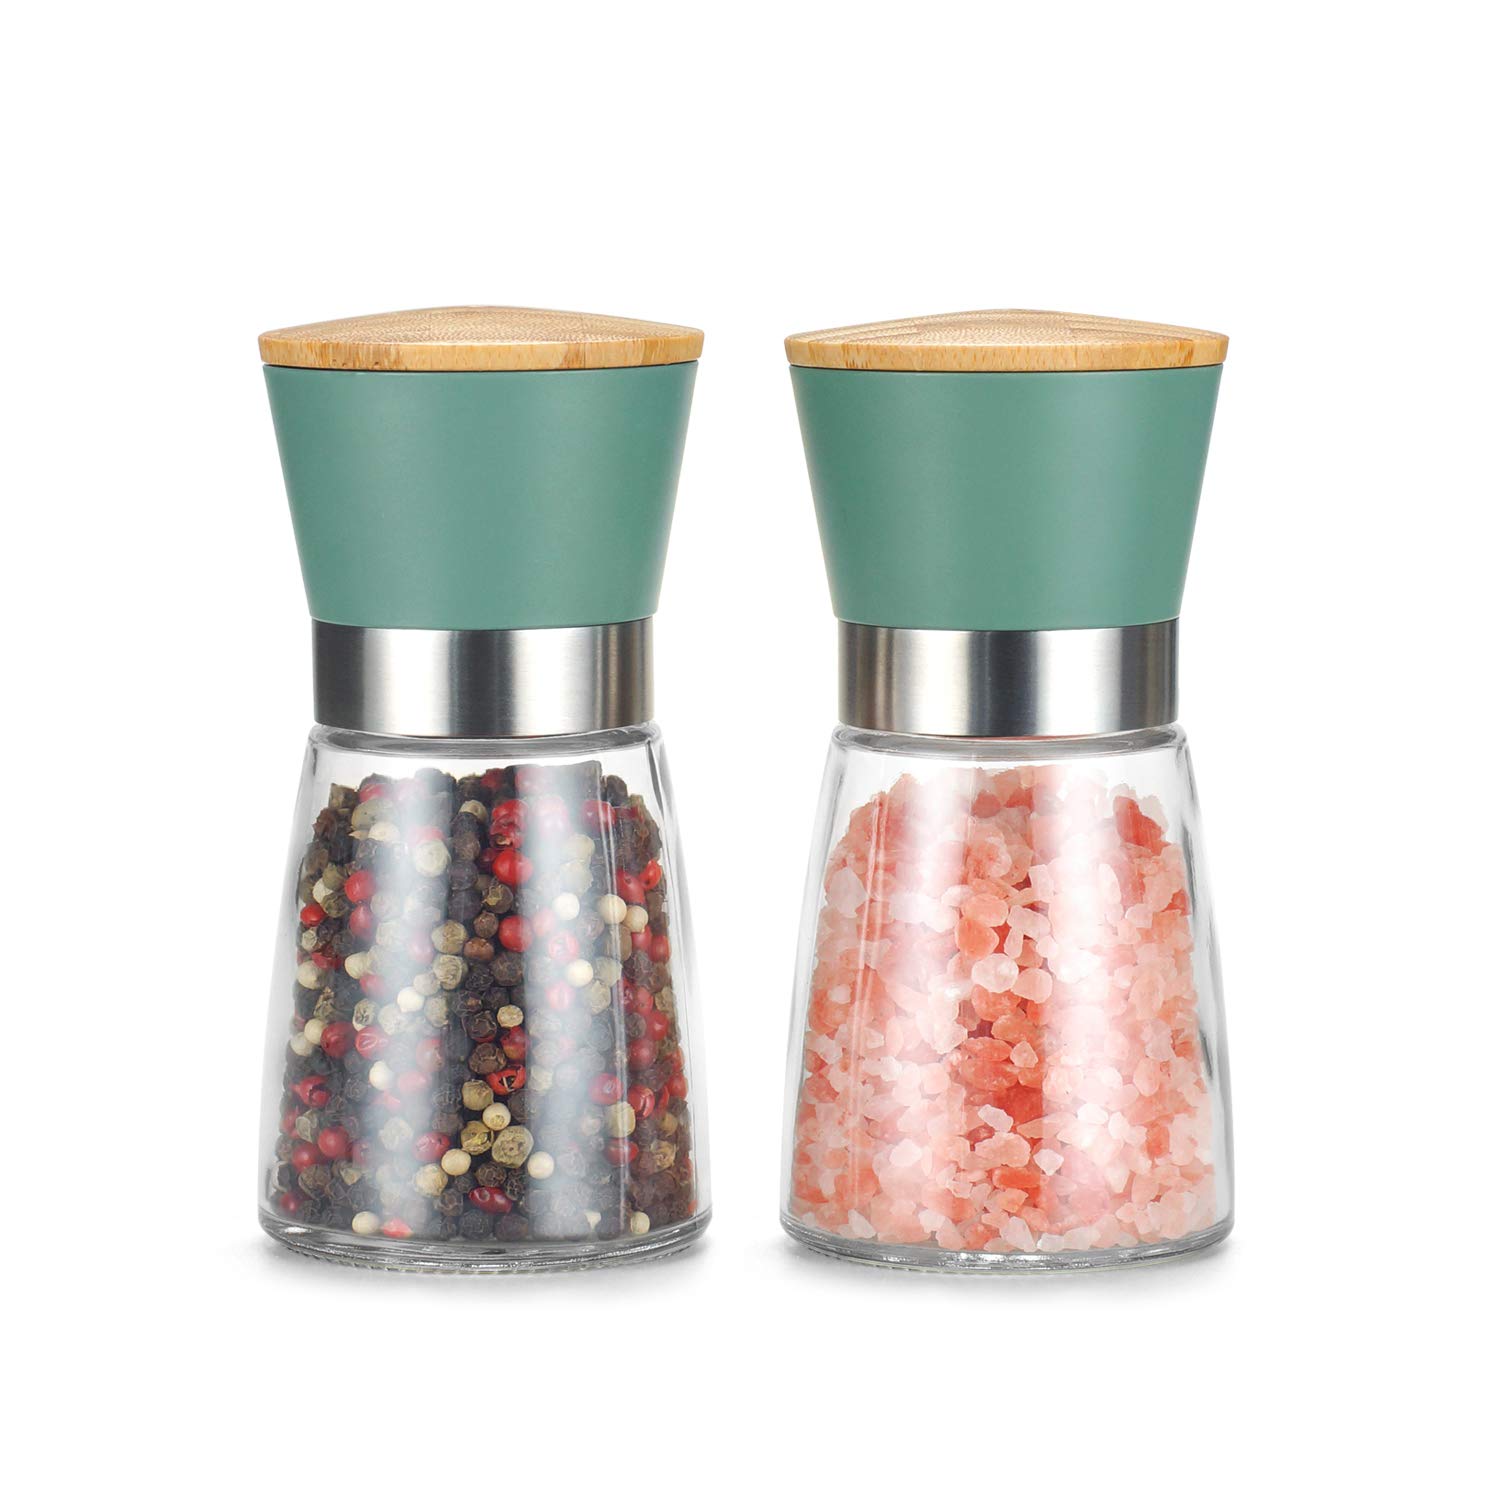 VUCCHINI Salt and Pepper Grinder Set Bamboo Lid- Adjustable Coarse Salt and Pepper Mills - Refillable Ceramic Burr Kitchen Gift Manual Salt Pepper Shakers Green